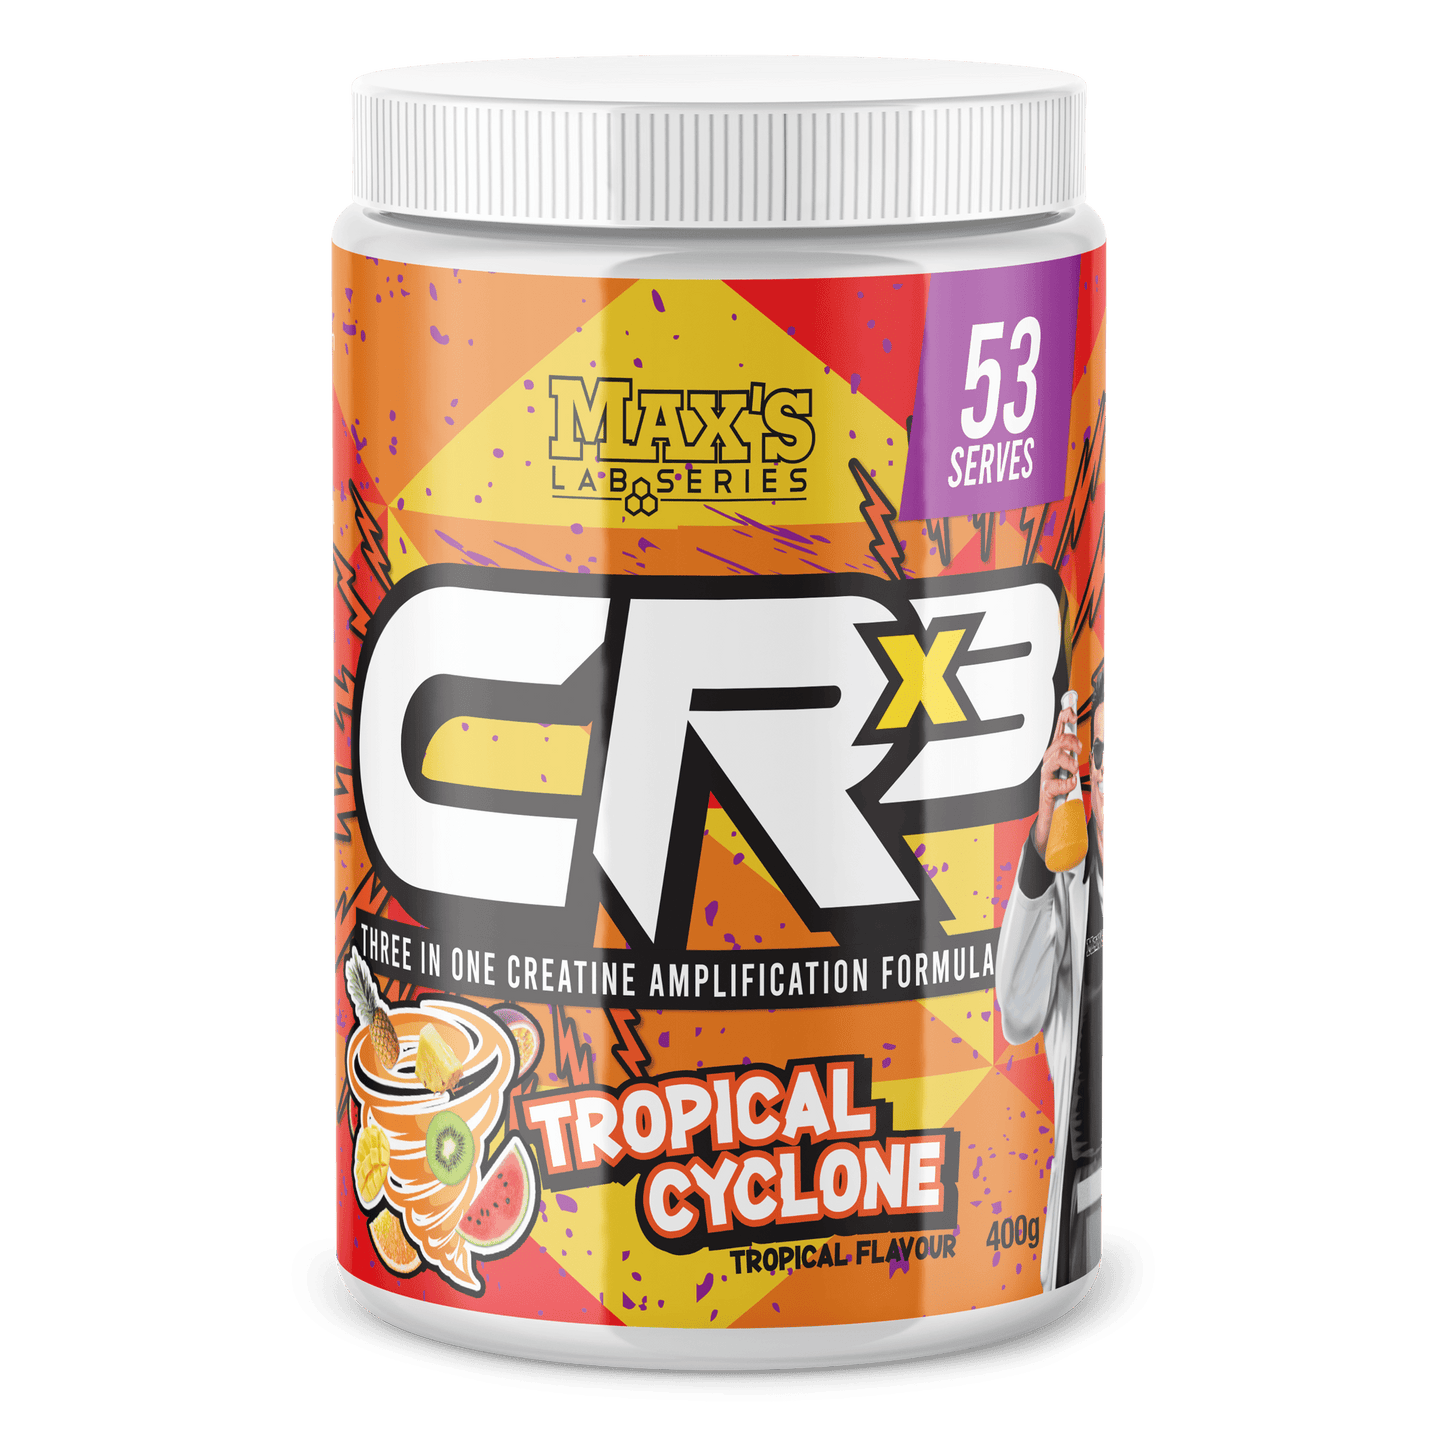 CRx3 - Creatine